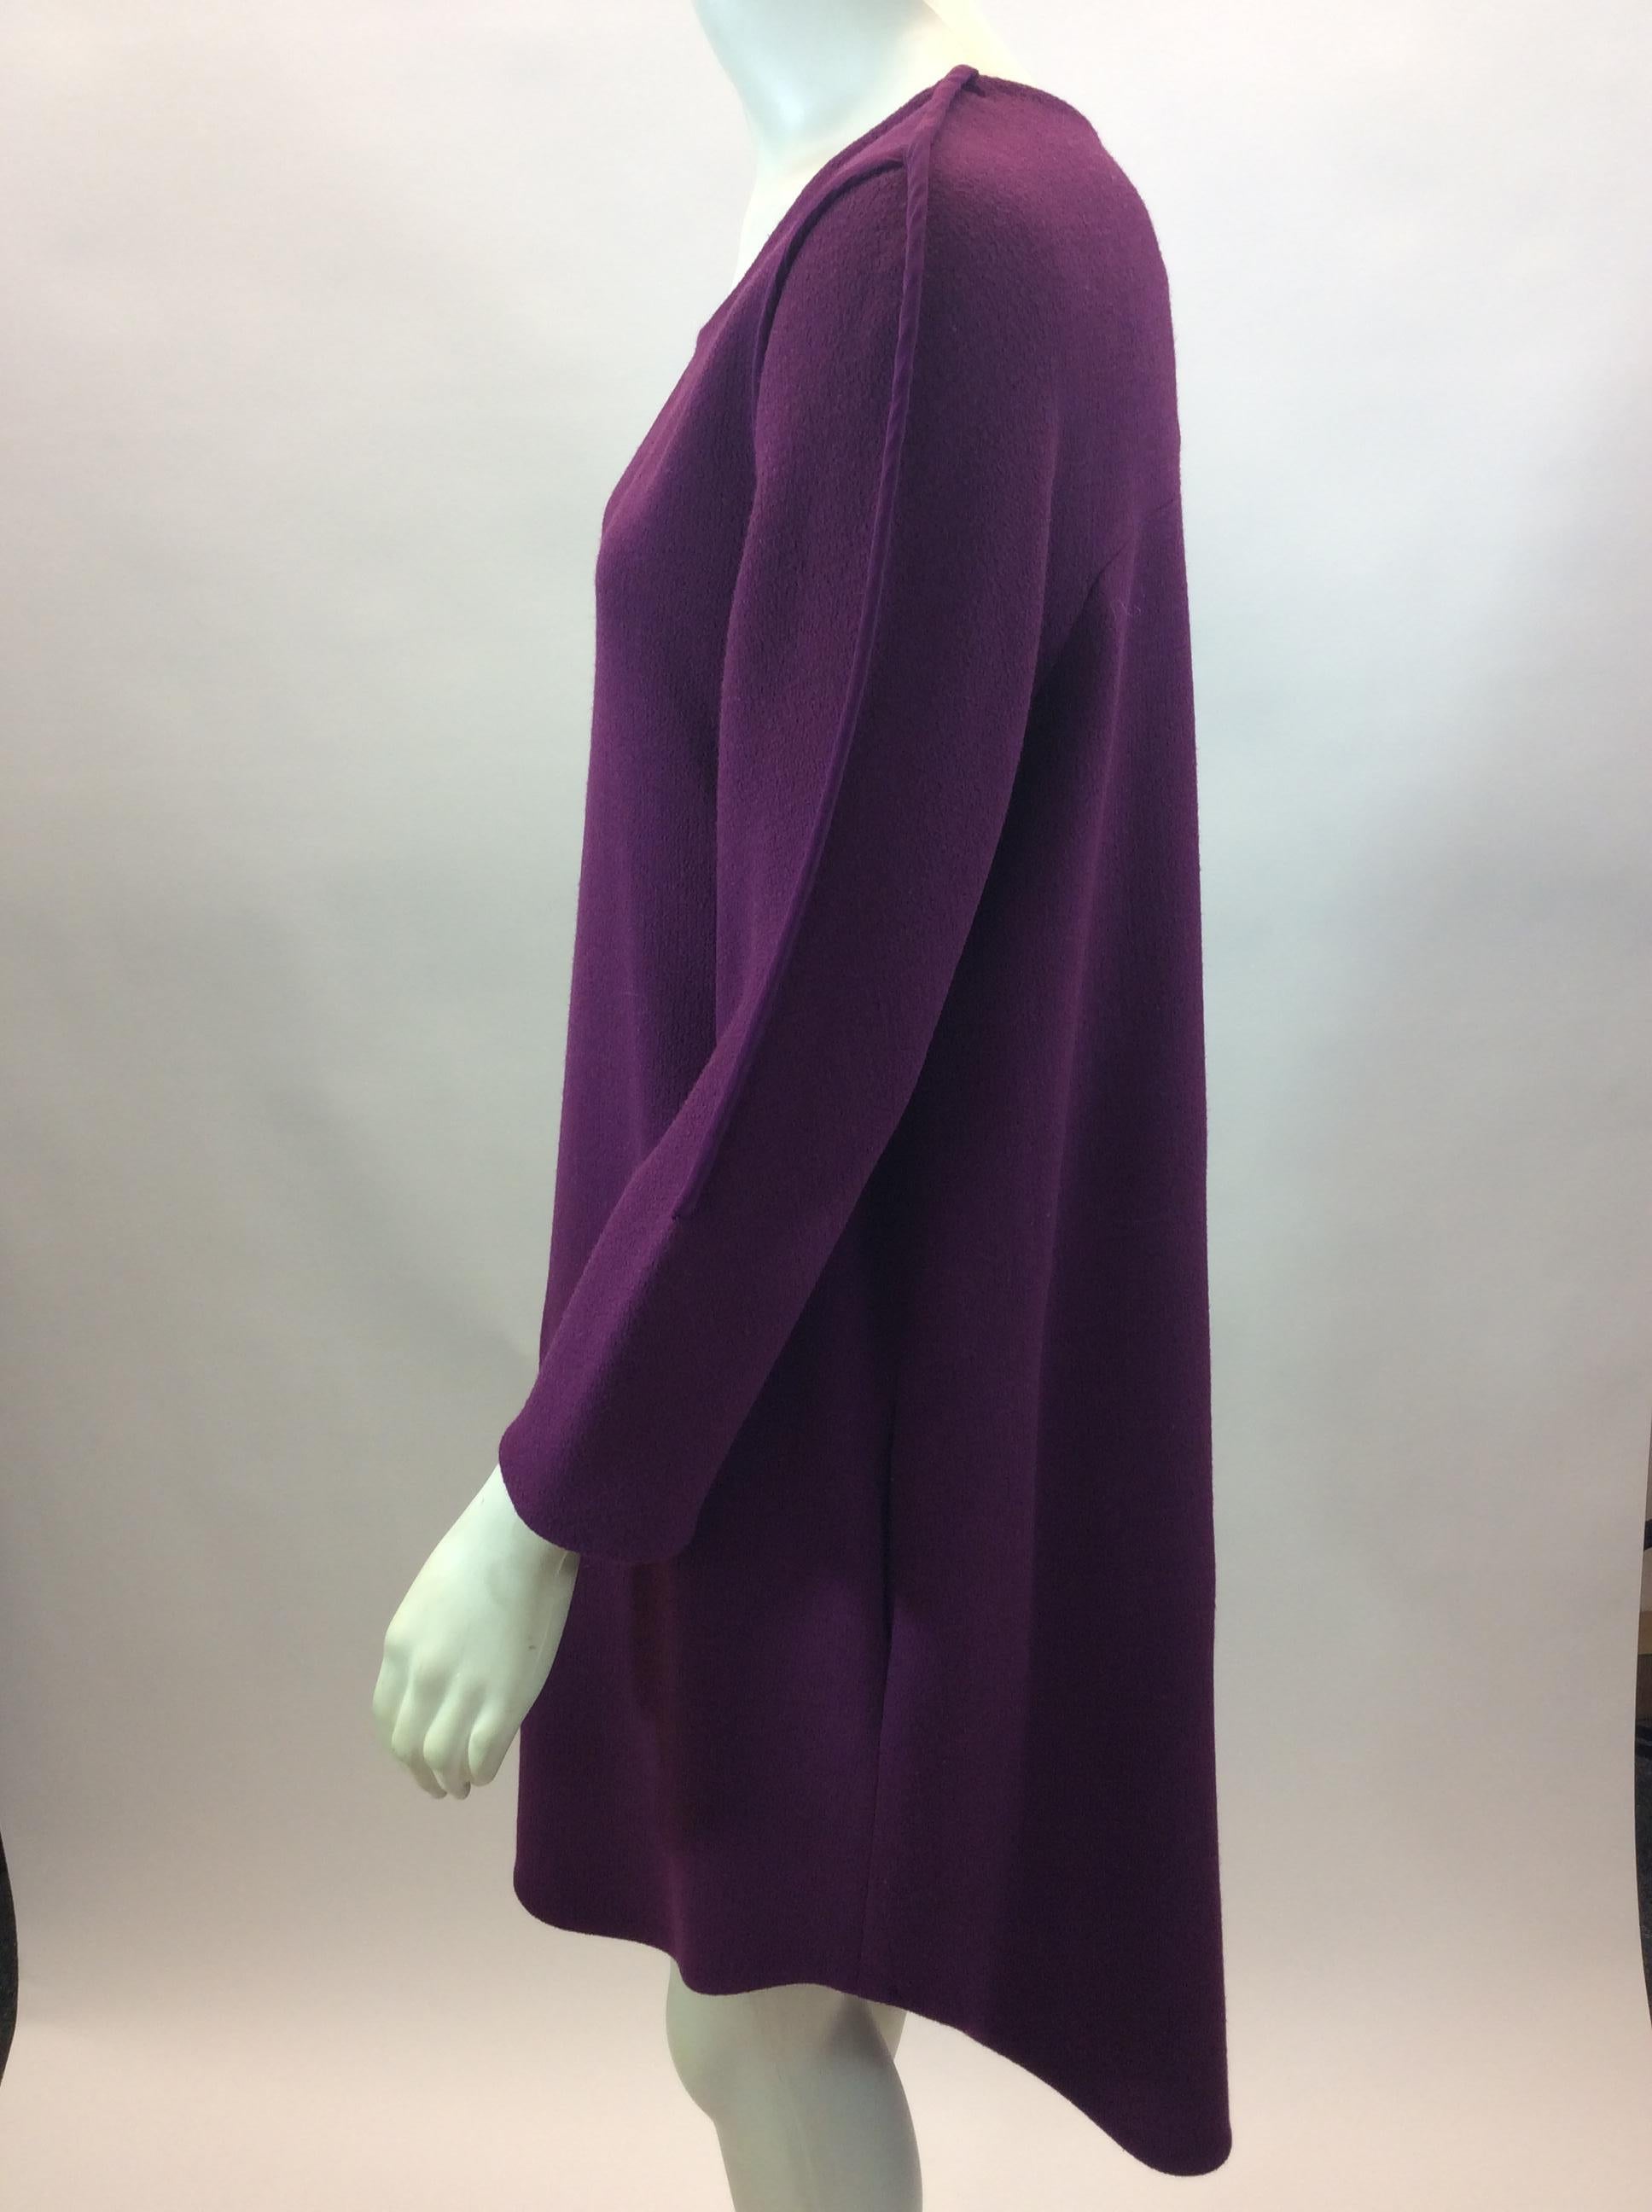 Phillip Lim Purple Wool Dress
$250
Made in China
80% wool, 20% polyamide
Size 4
Length 34